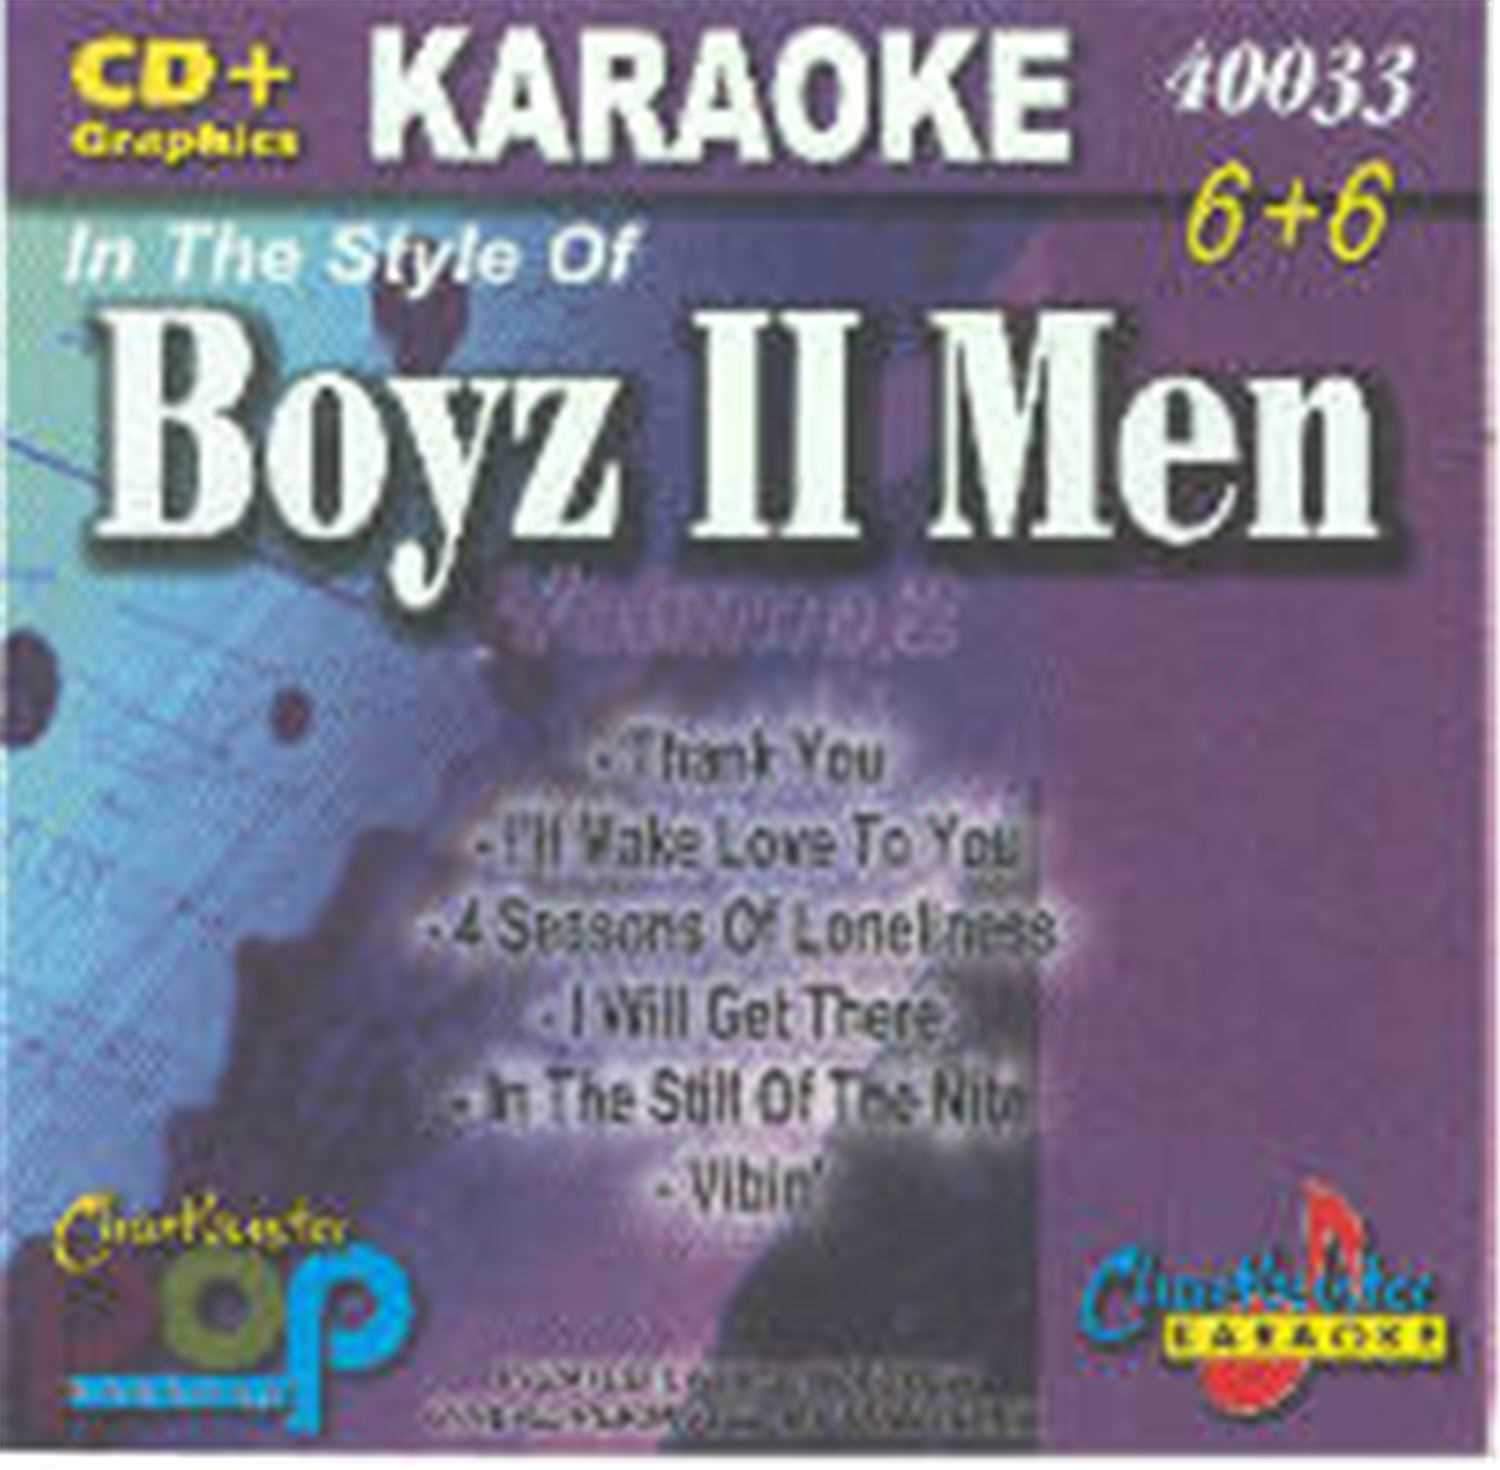 Chartbuster Karaoke Artist Boyz Ii Men Vol 2 - ProSound and Stage Lighting